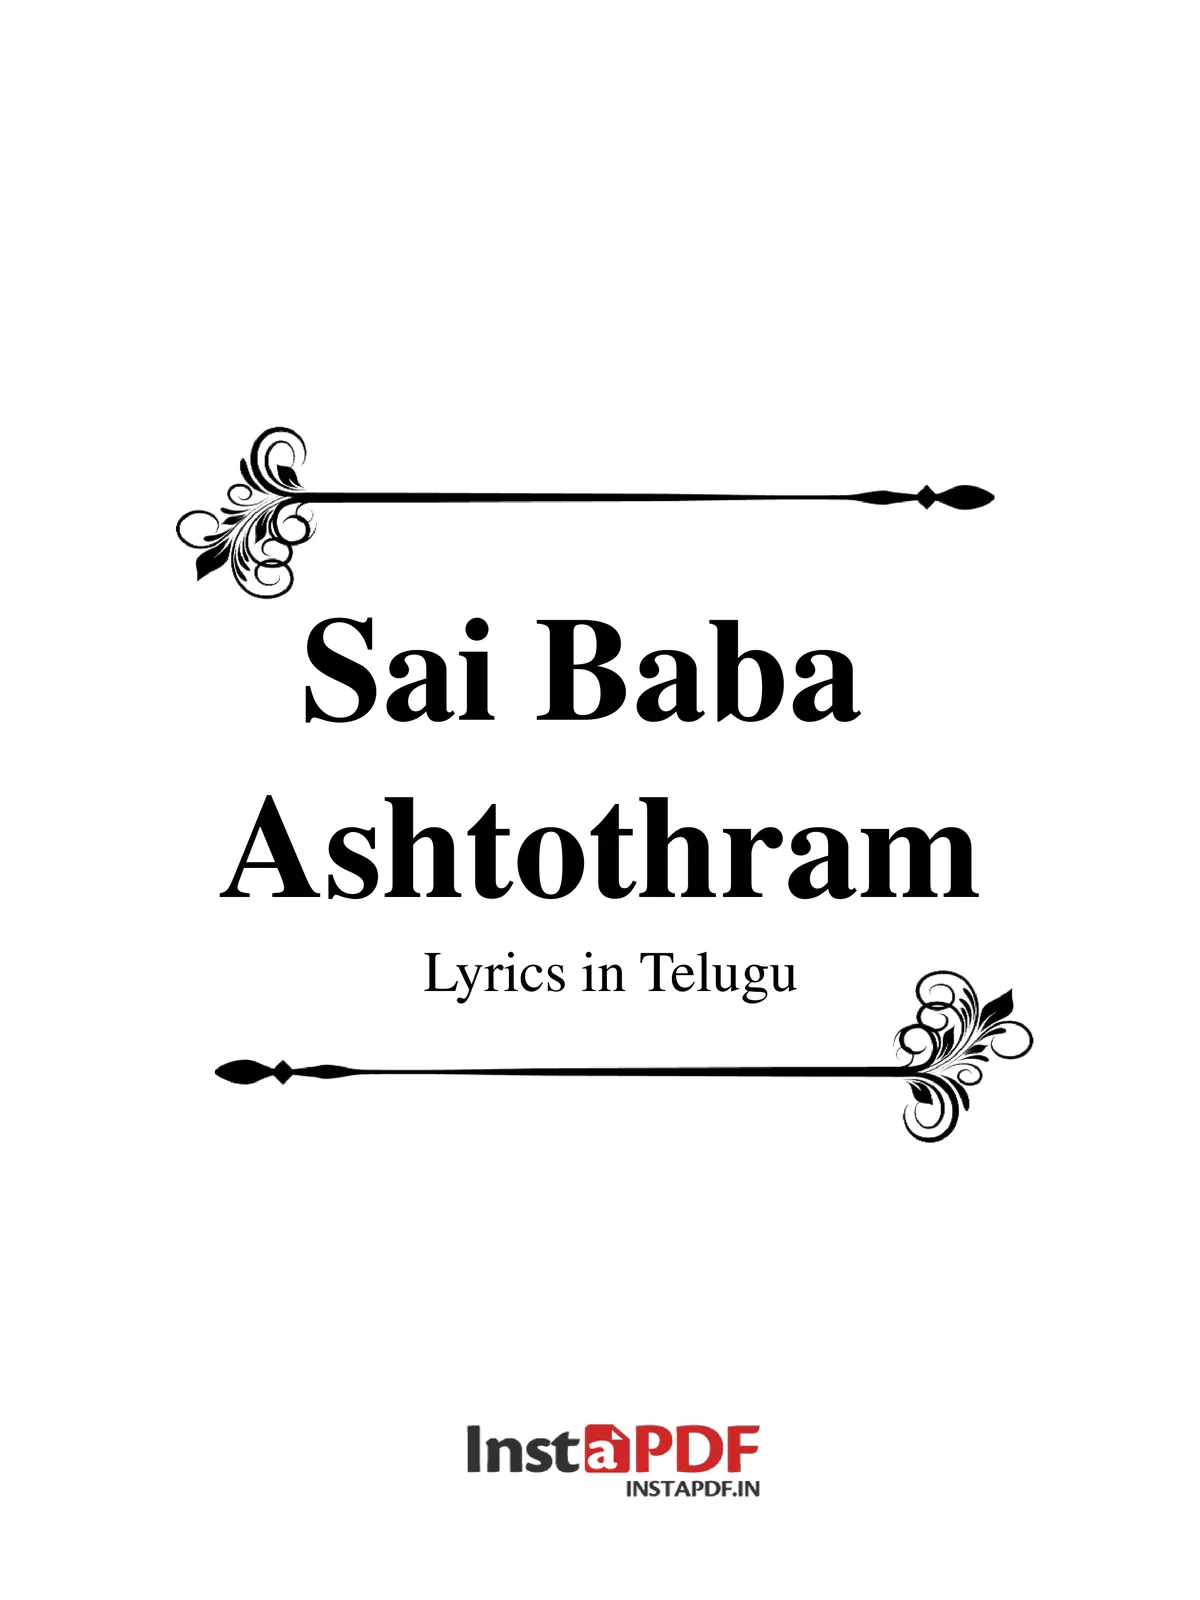 Sai Baba Ashtothram Telugu